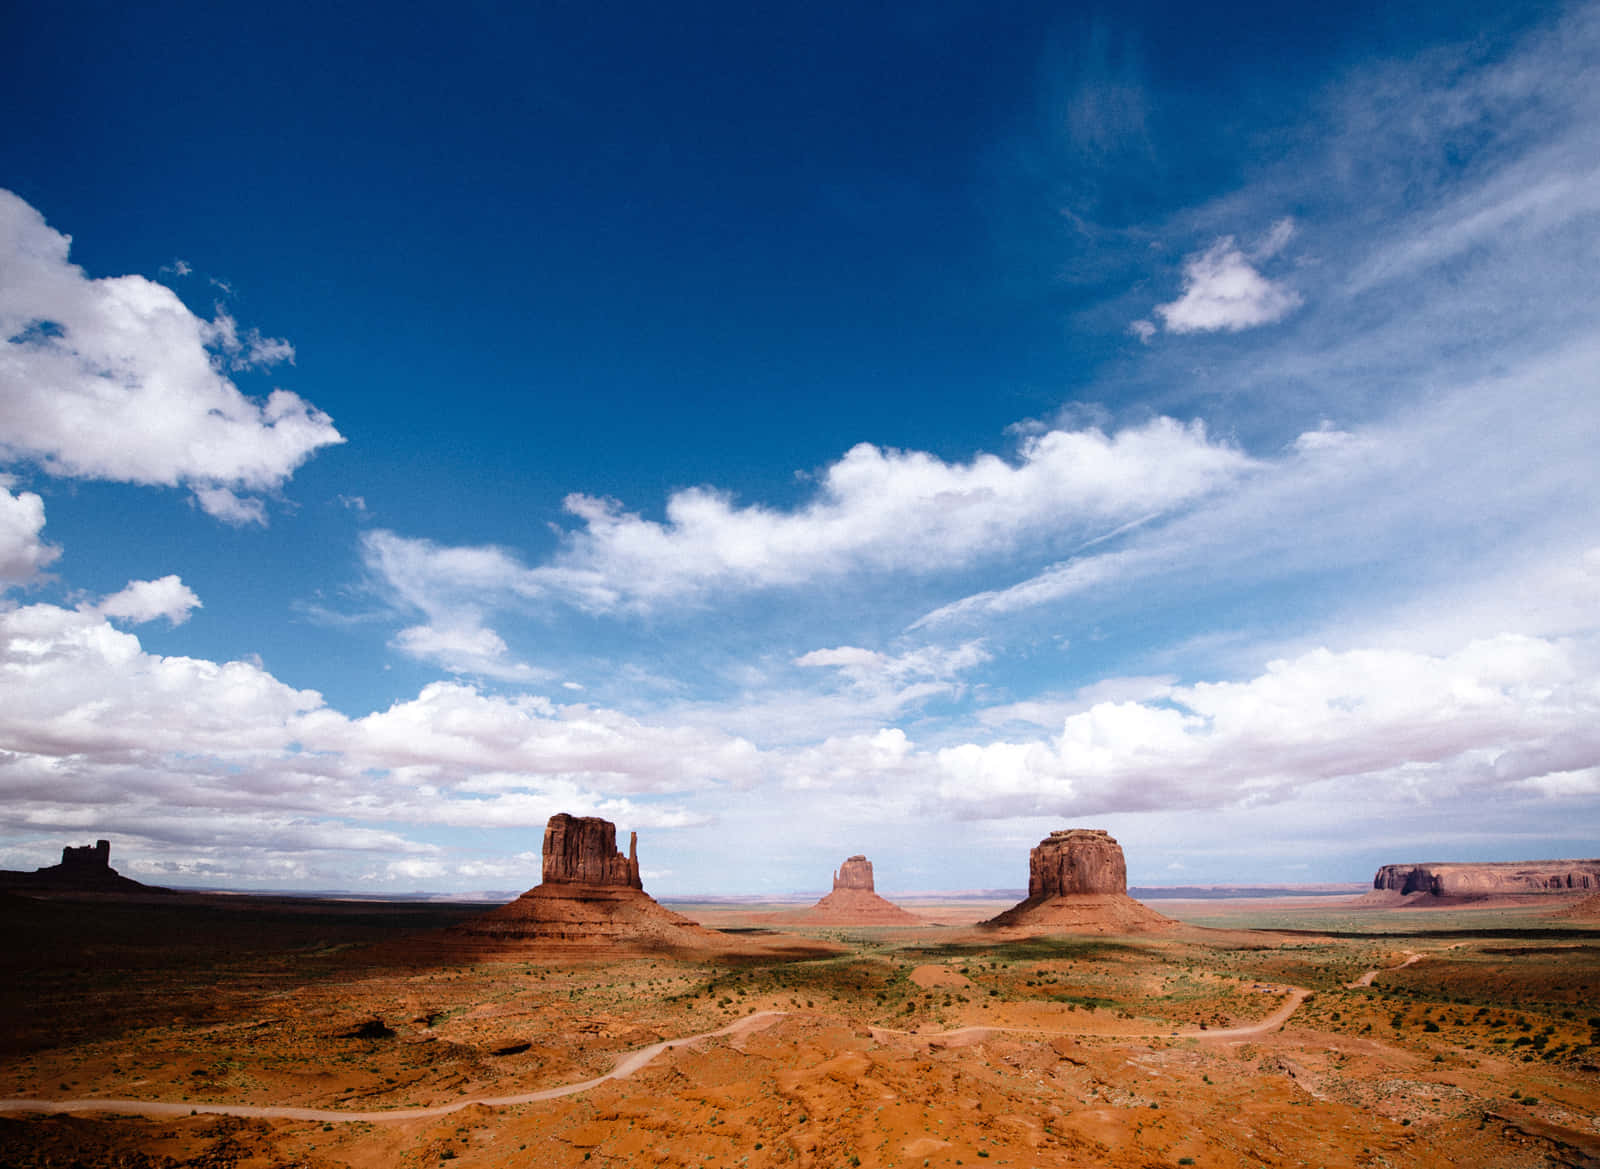 Tramontomozzafiato Sul Monument Valley Navajo Tribal Park. Sfondo